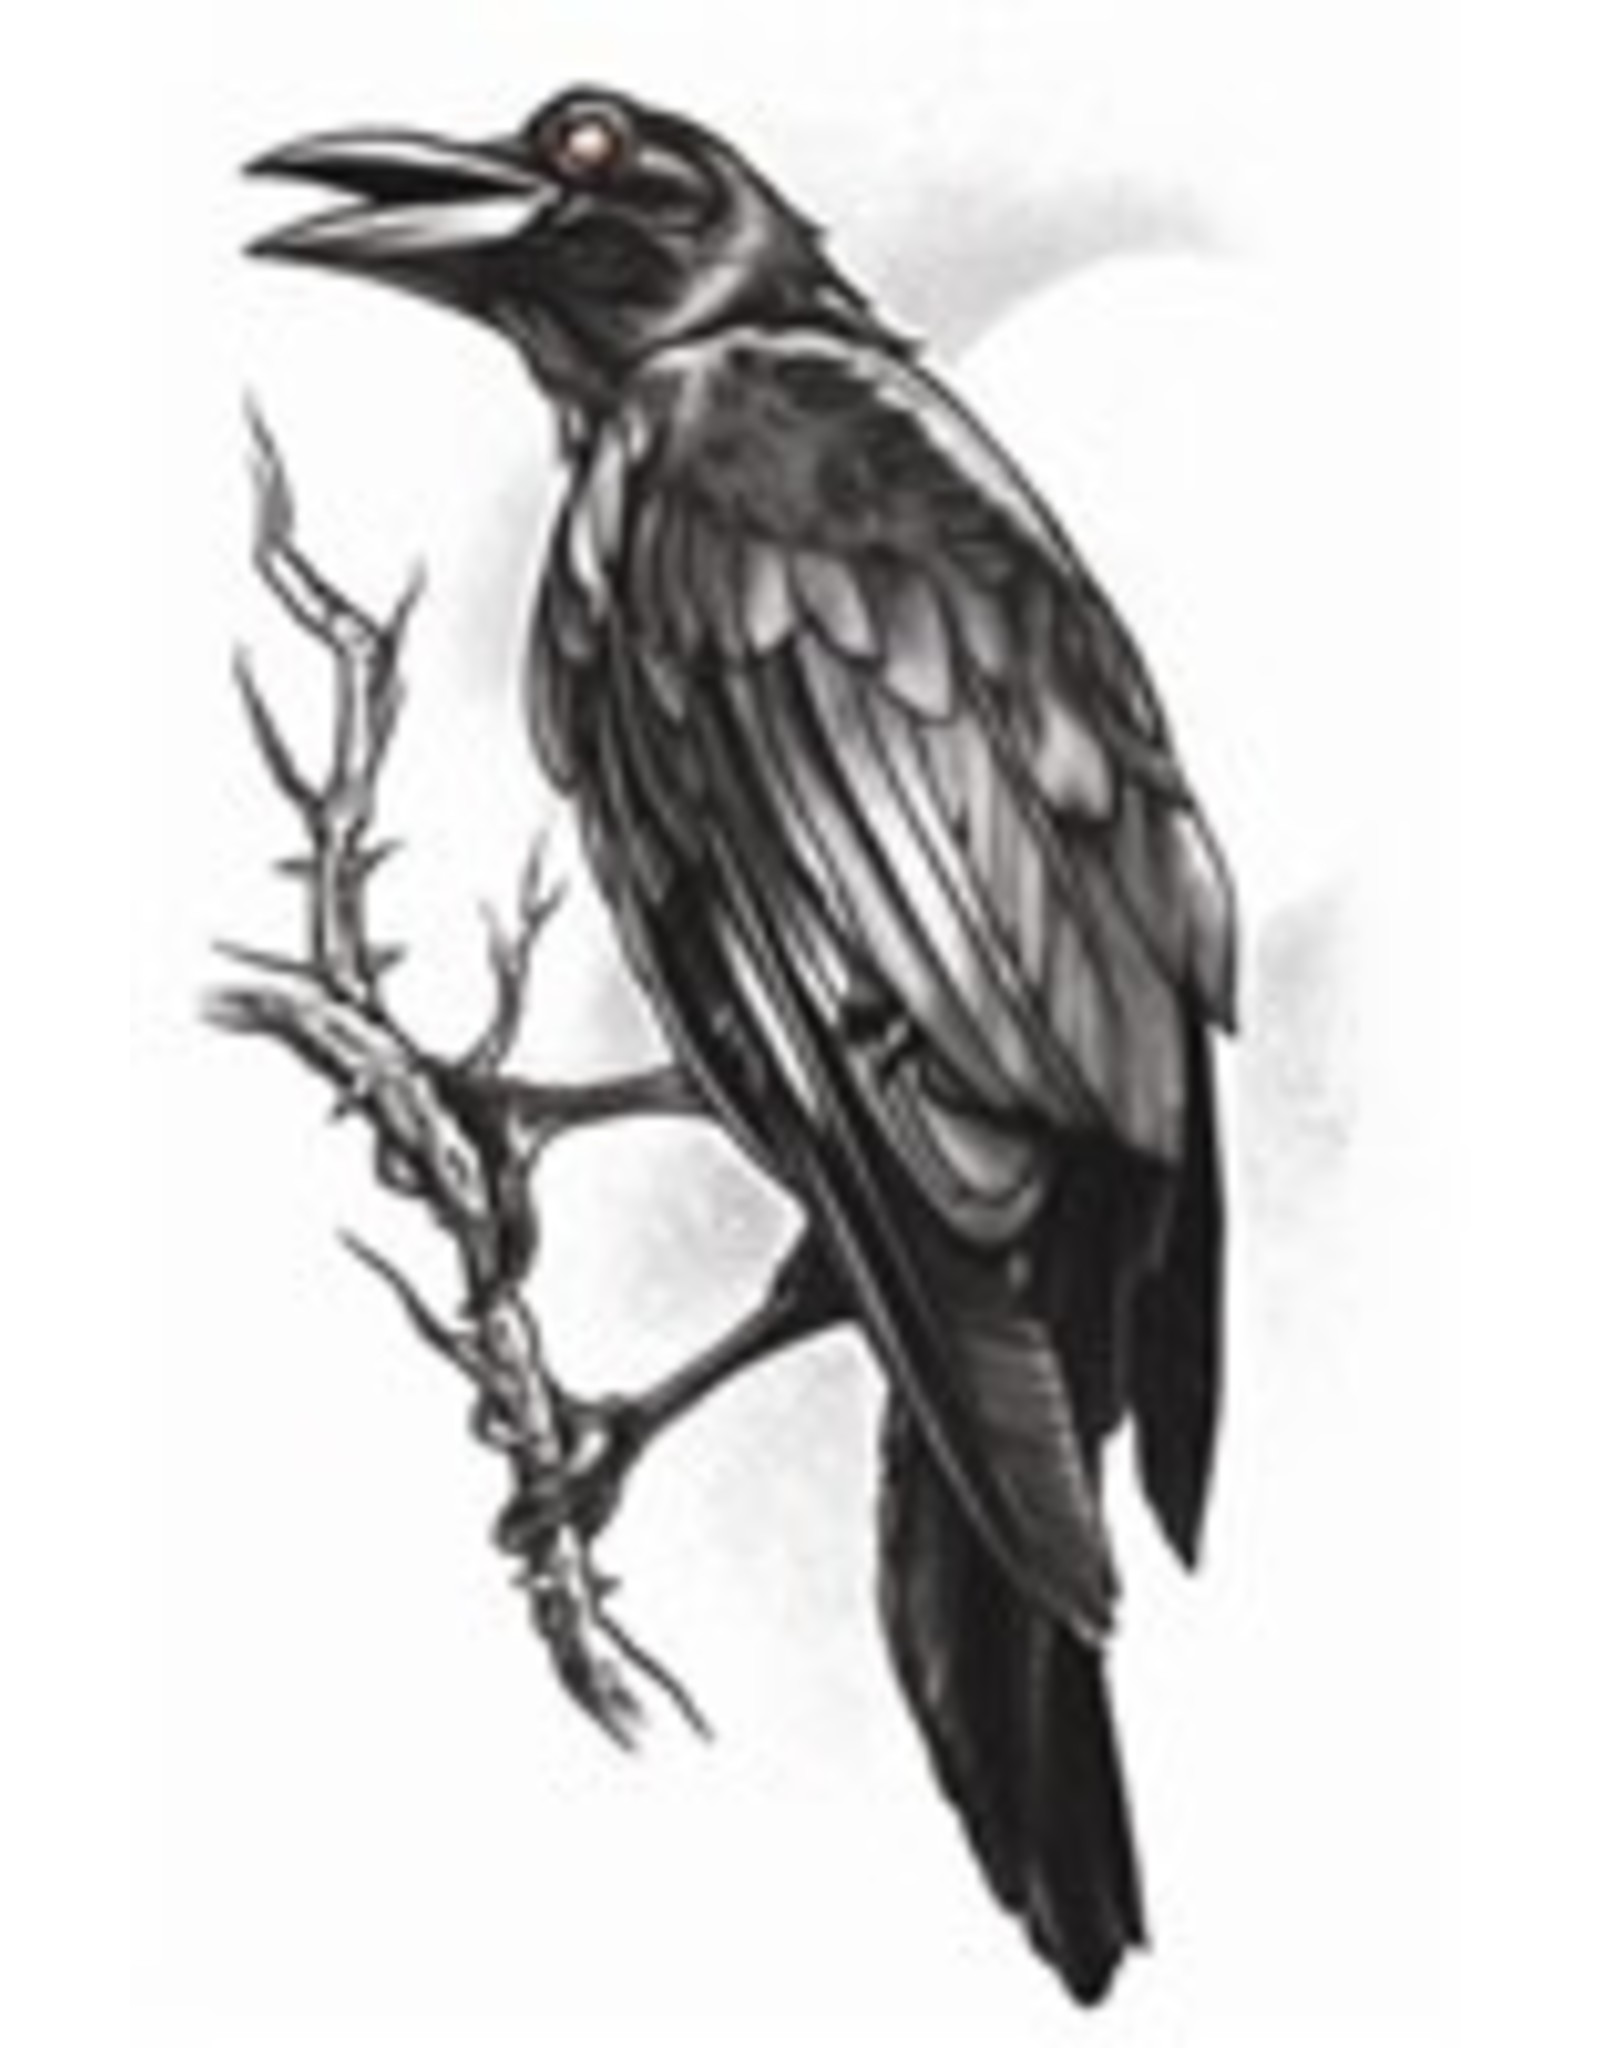 Tinsley Transfers Temporary Tattoos - Raven